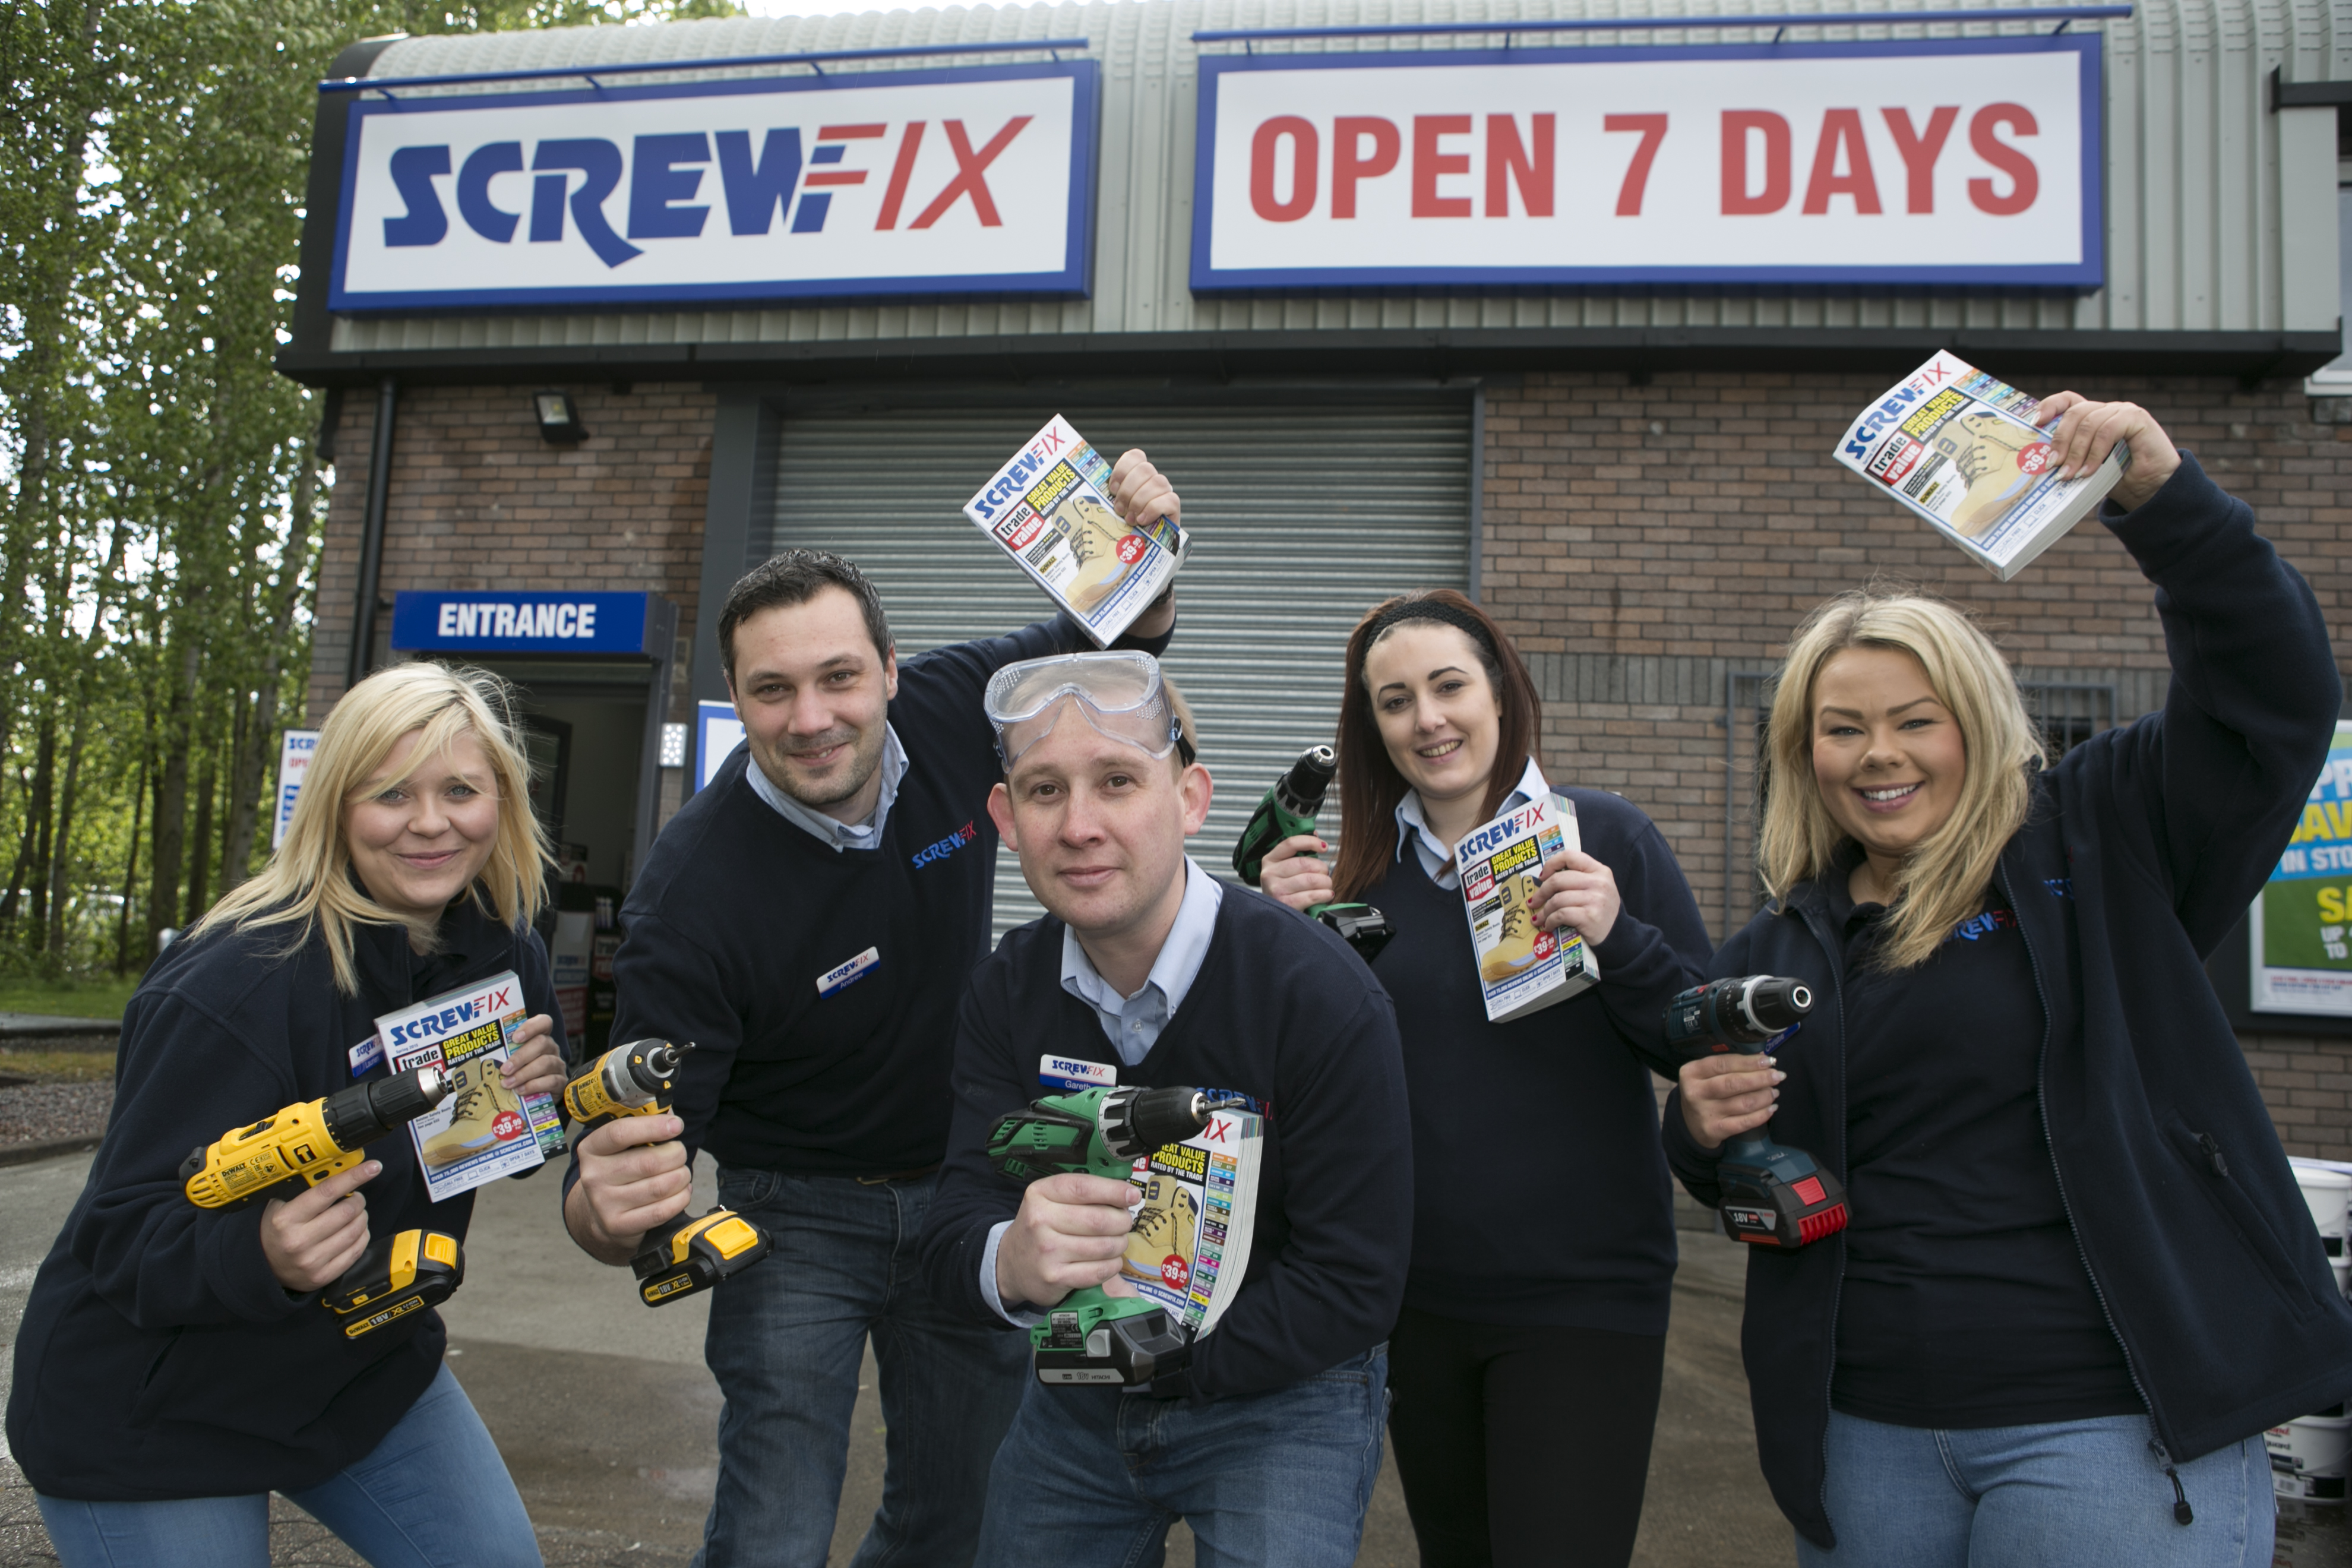 Aberdare’s first Screwfix store is declared a runaway success